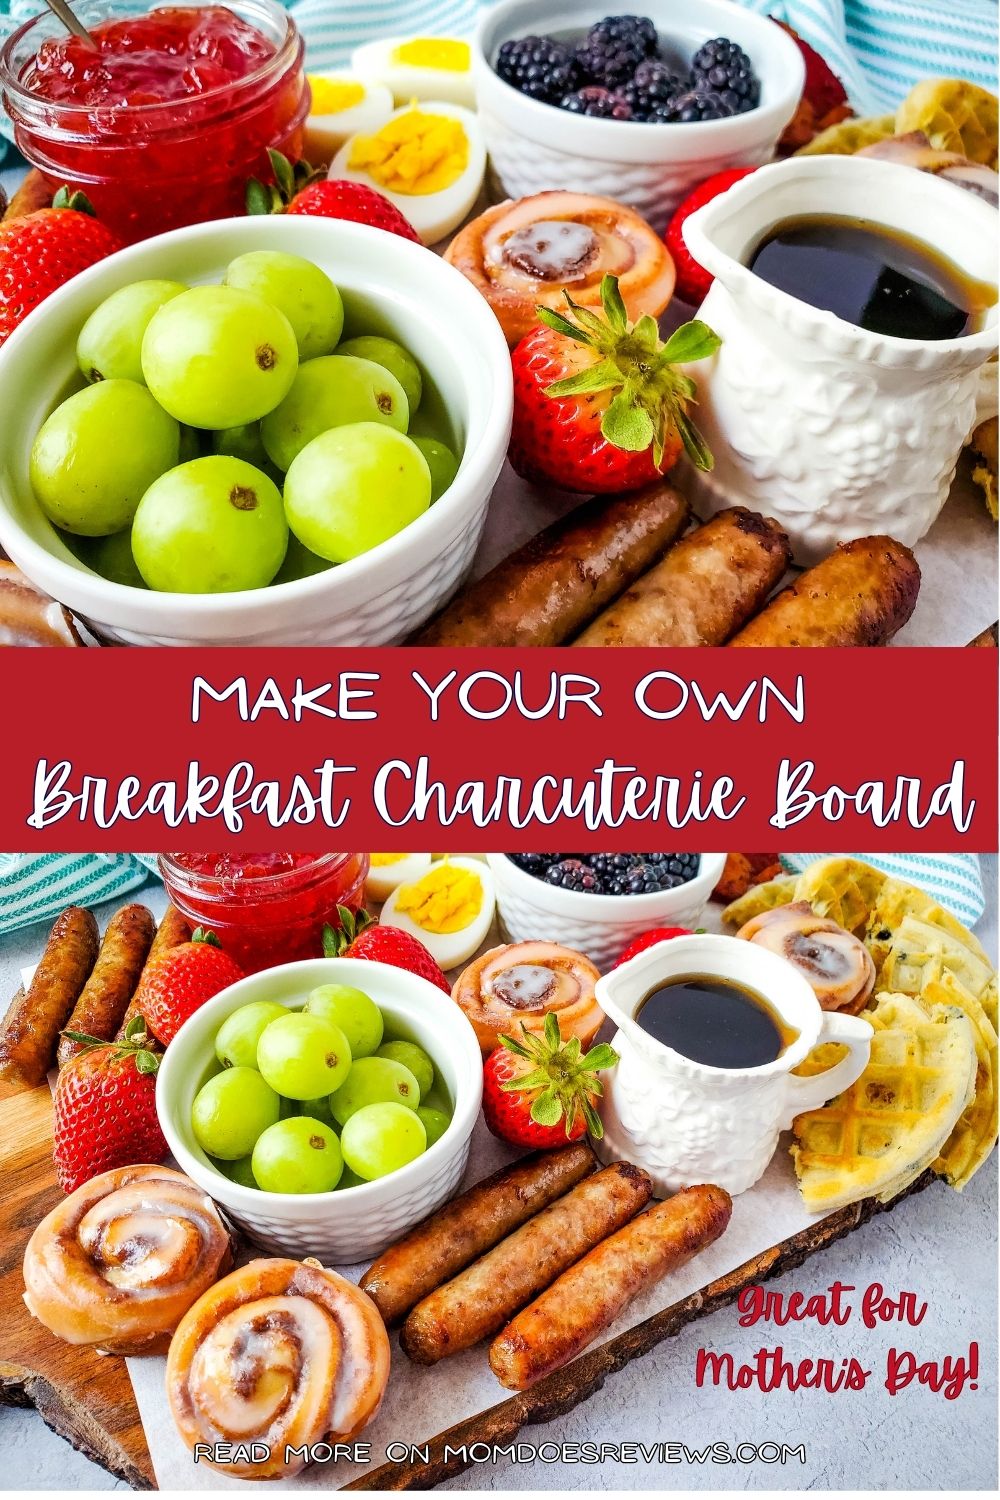 Make Your Own Breakfast Charcuterie Board